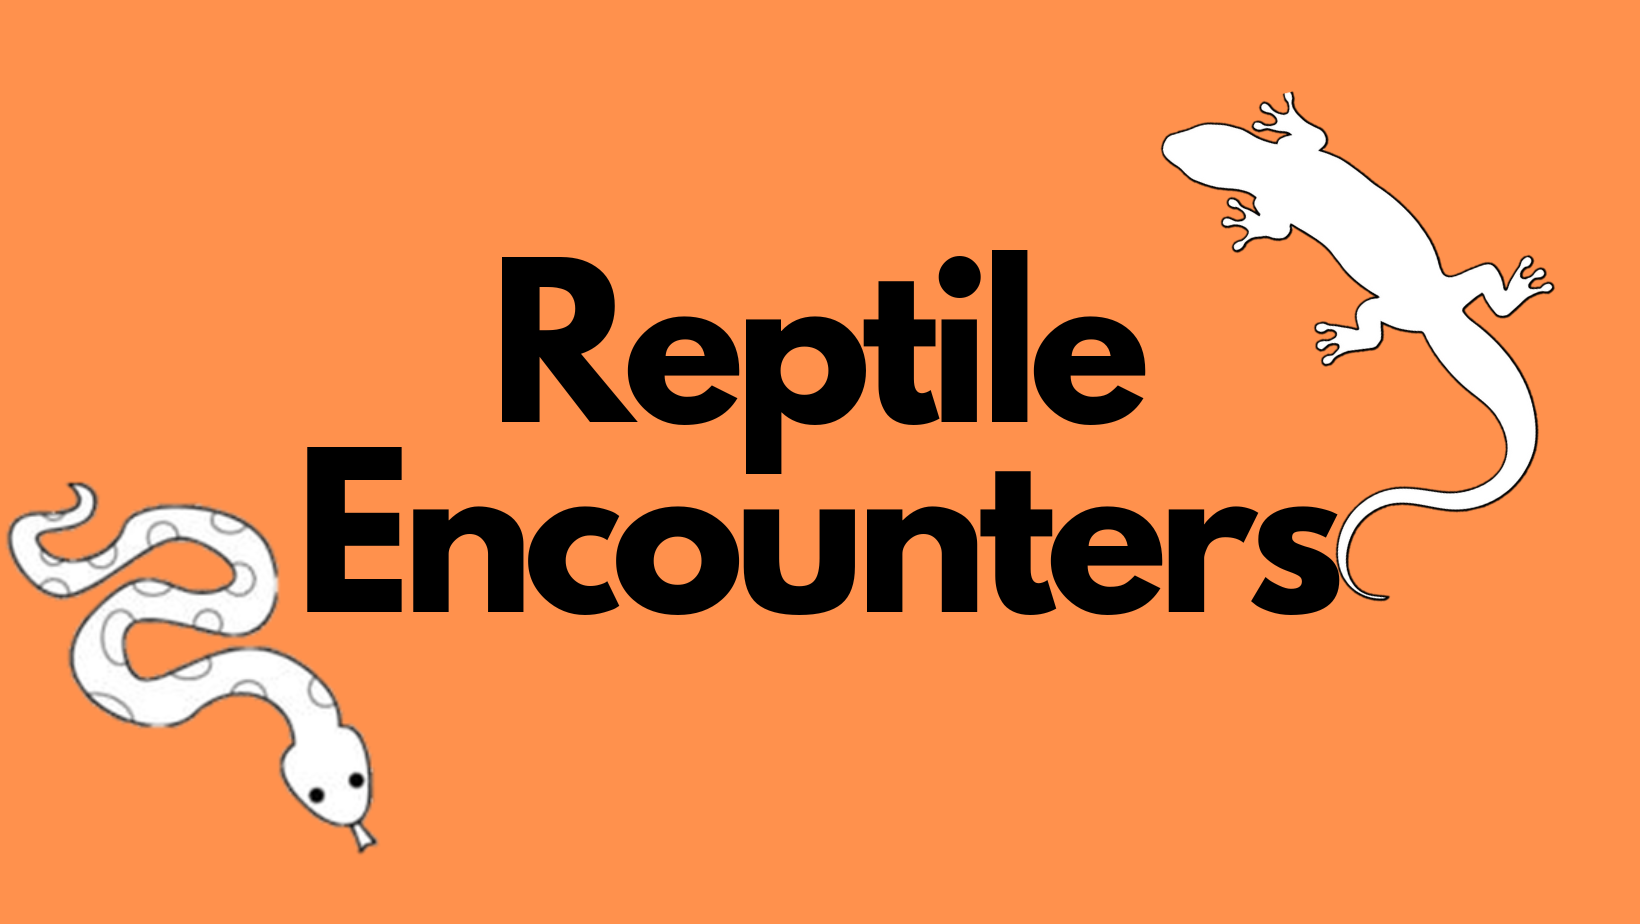 Reptile Encounters